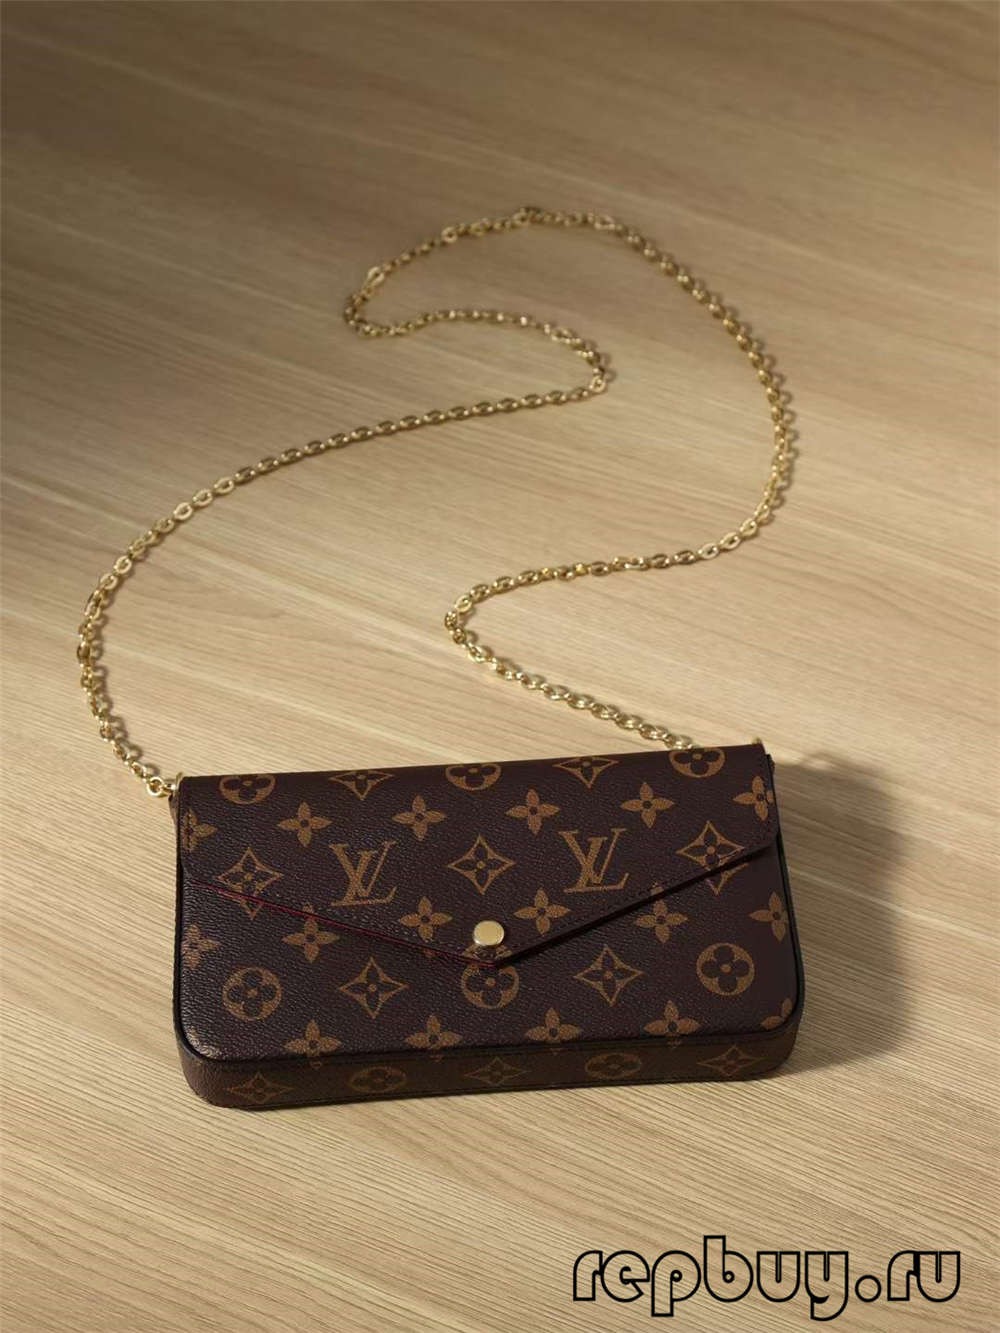 لوئس ویټون پوچیټ فیلیسی د لوړ کیفیت نقل کڅوړې (2022 وروستی)-Best Quality Fake Louis Vuitton Bag Online Store, Replica designer bag ru